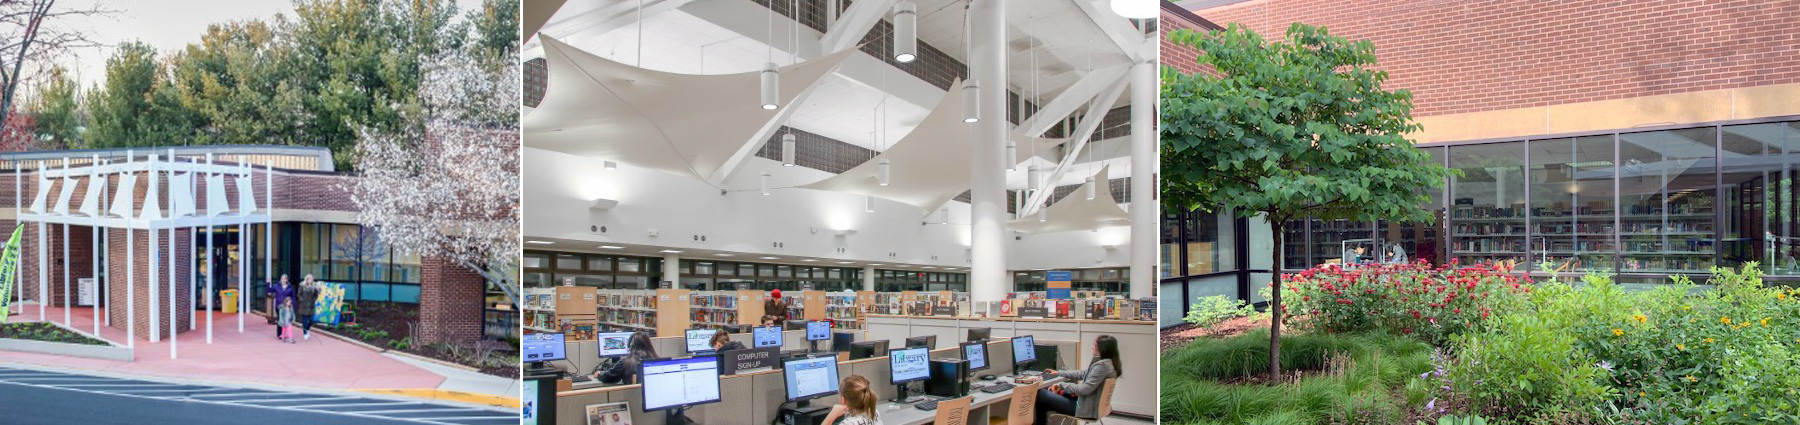 Tysons-Pimmit Regional Library